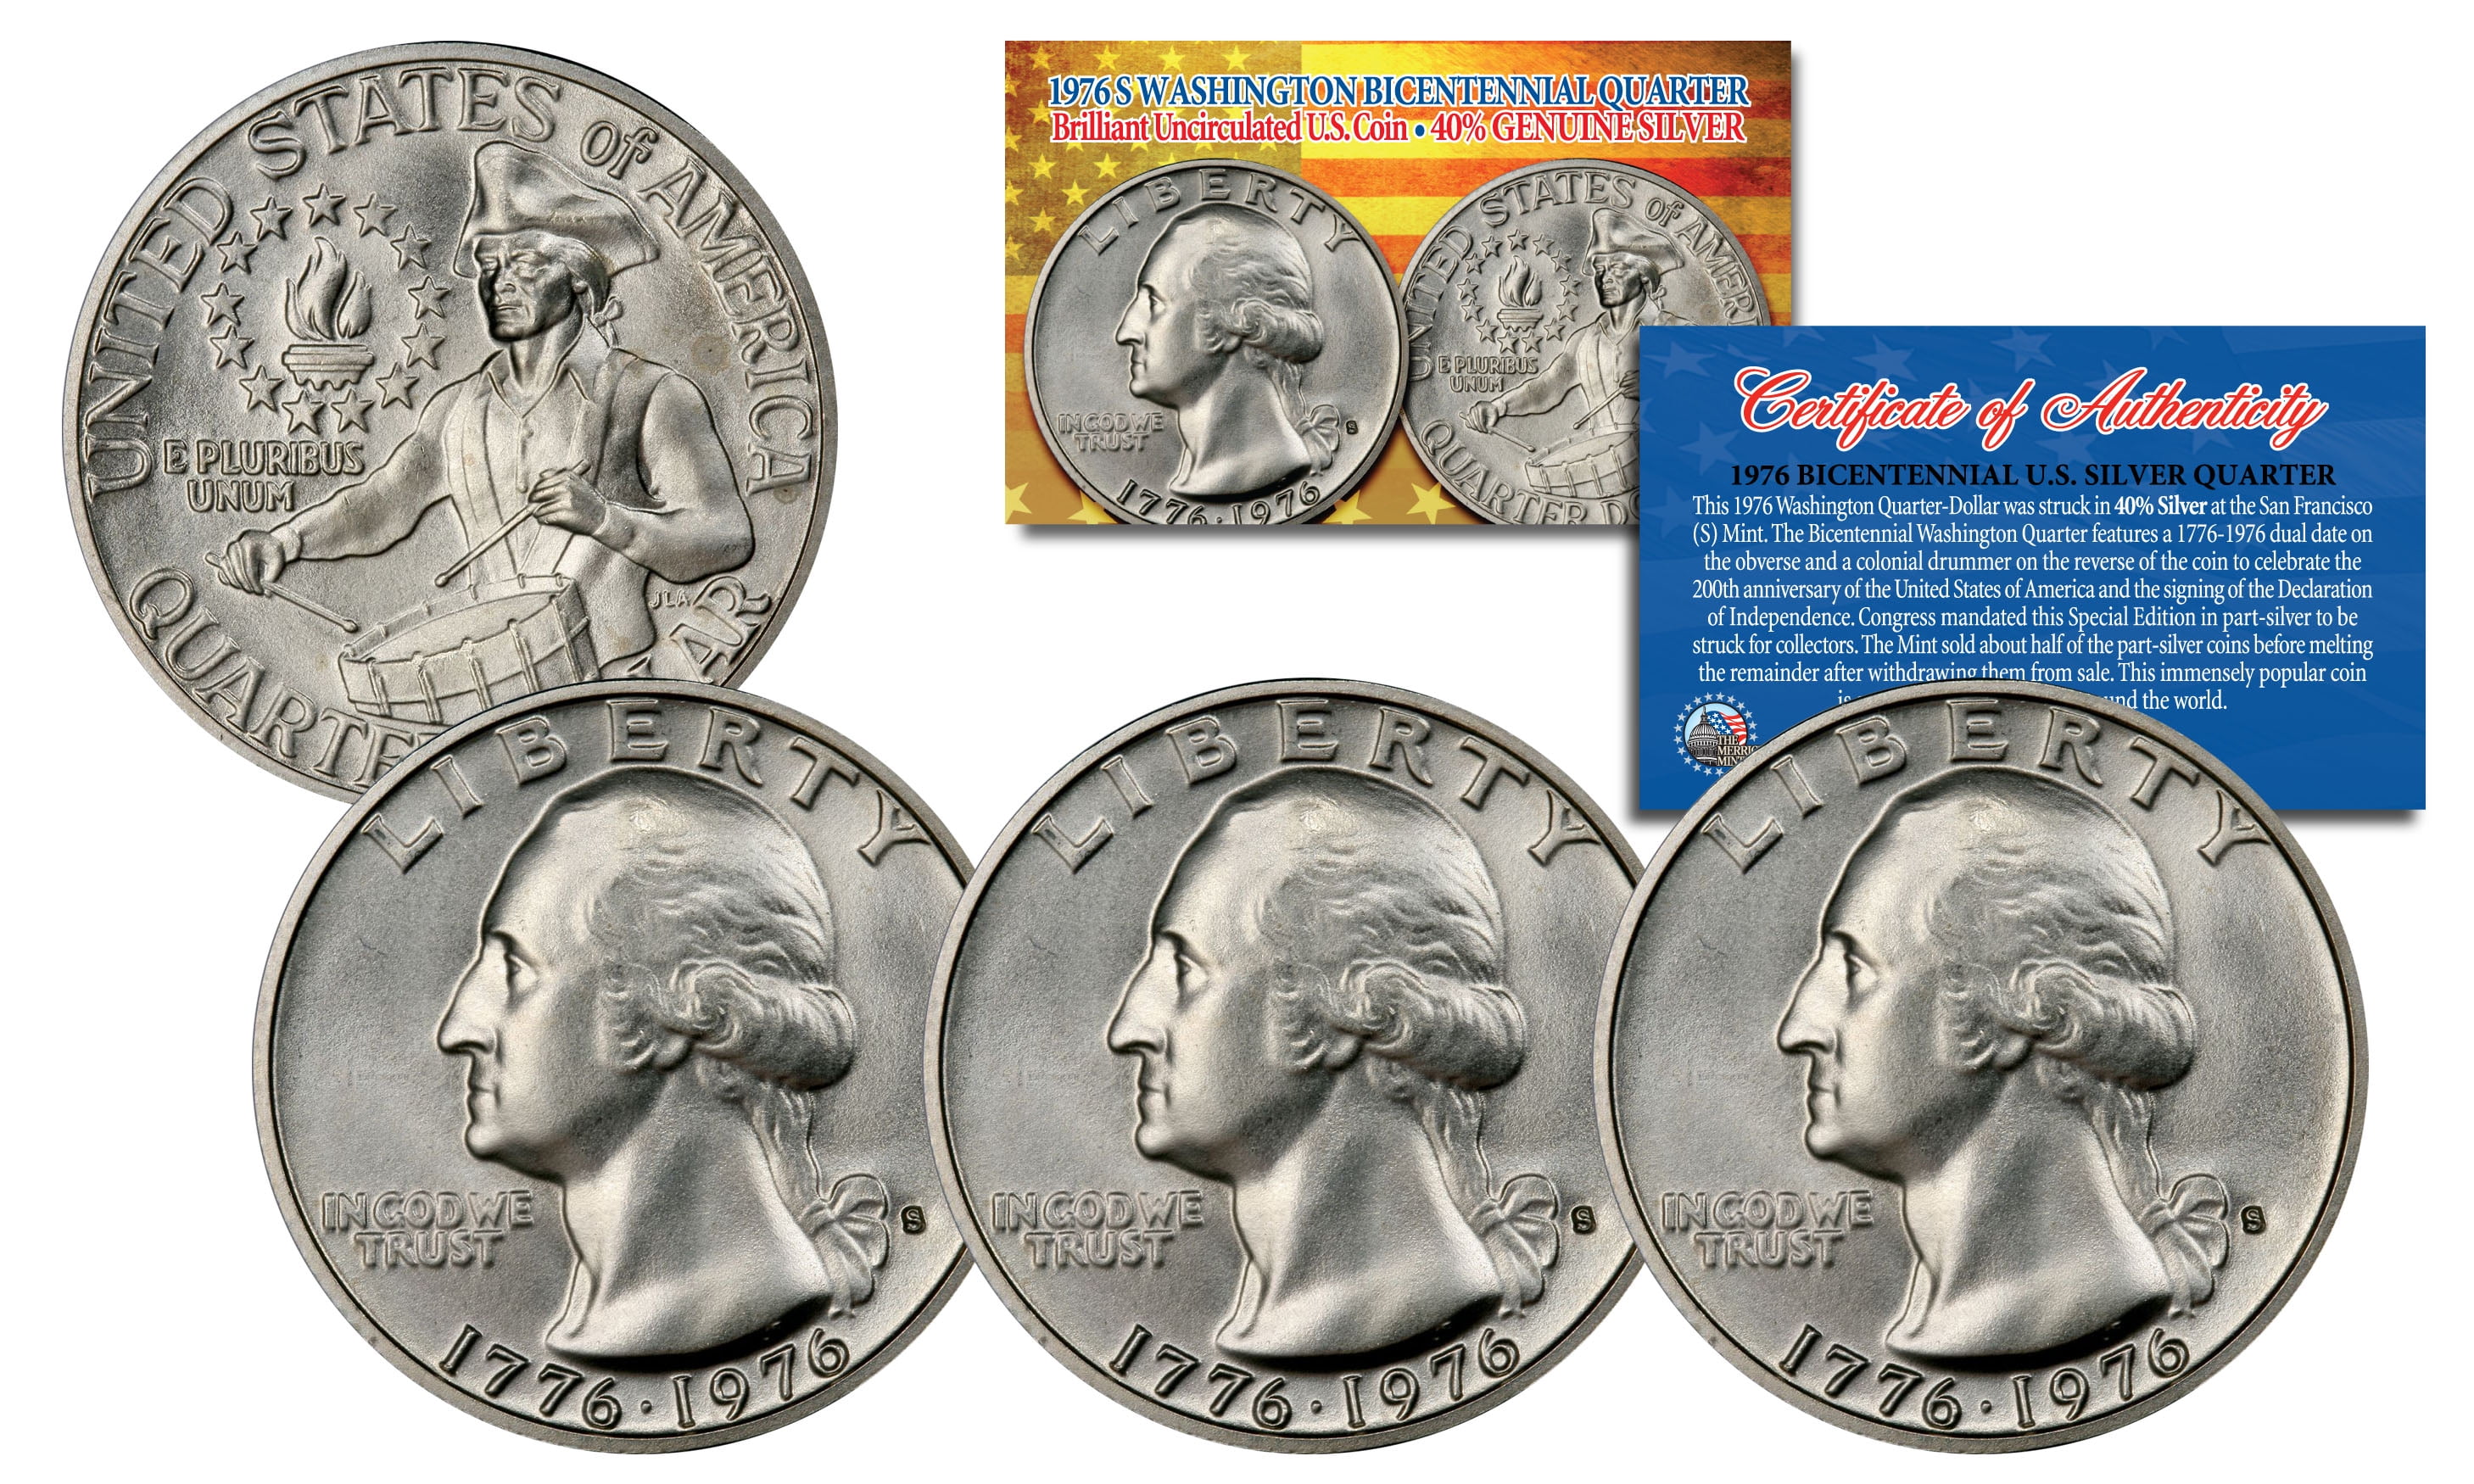 Details about   BLACK RUTHENIUM Genuine 1976 Washington Bicentennial Quarter US Coin Lot of 10 